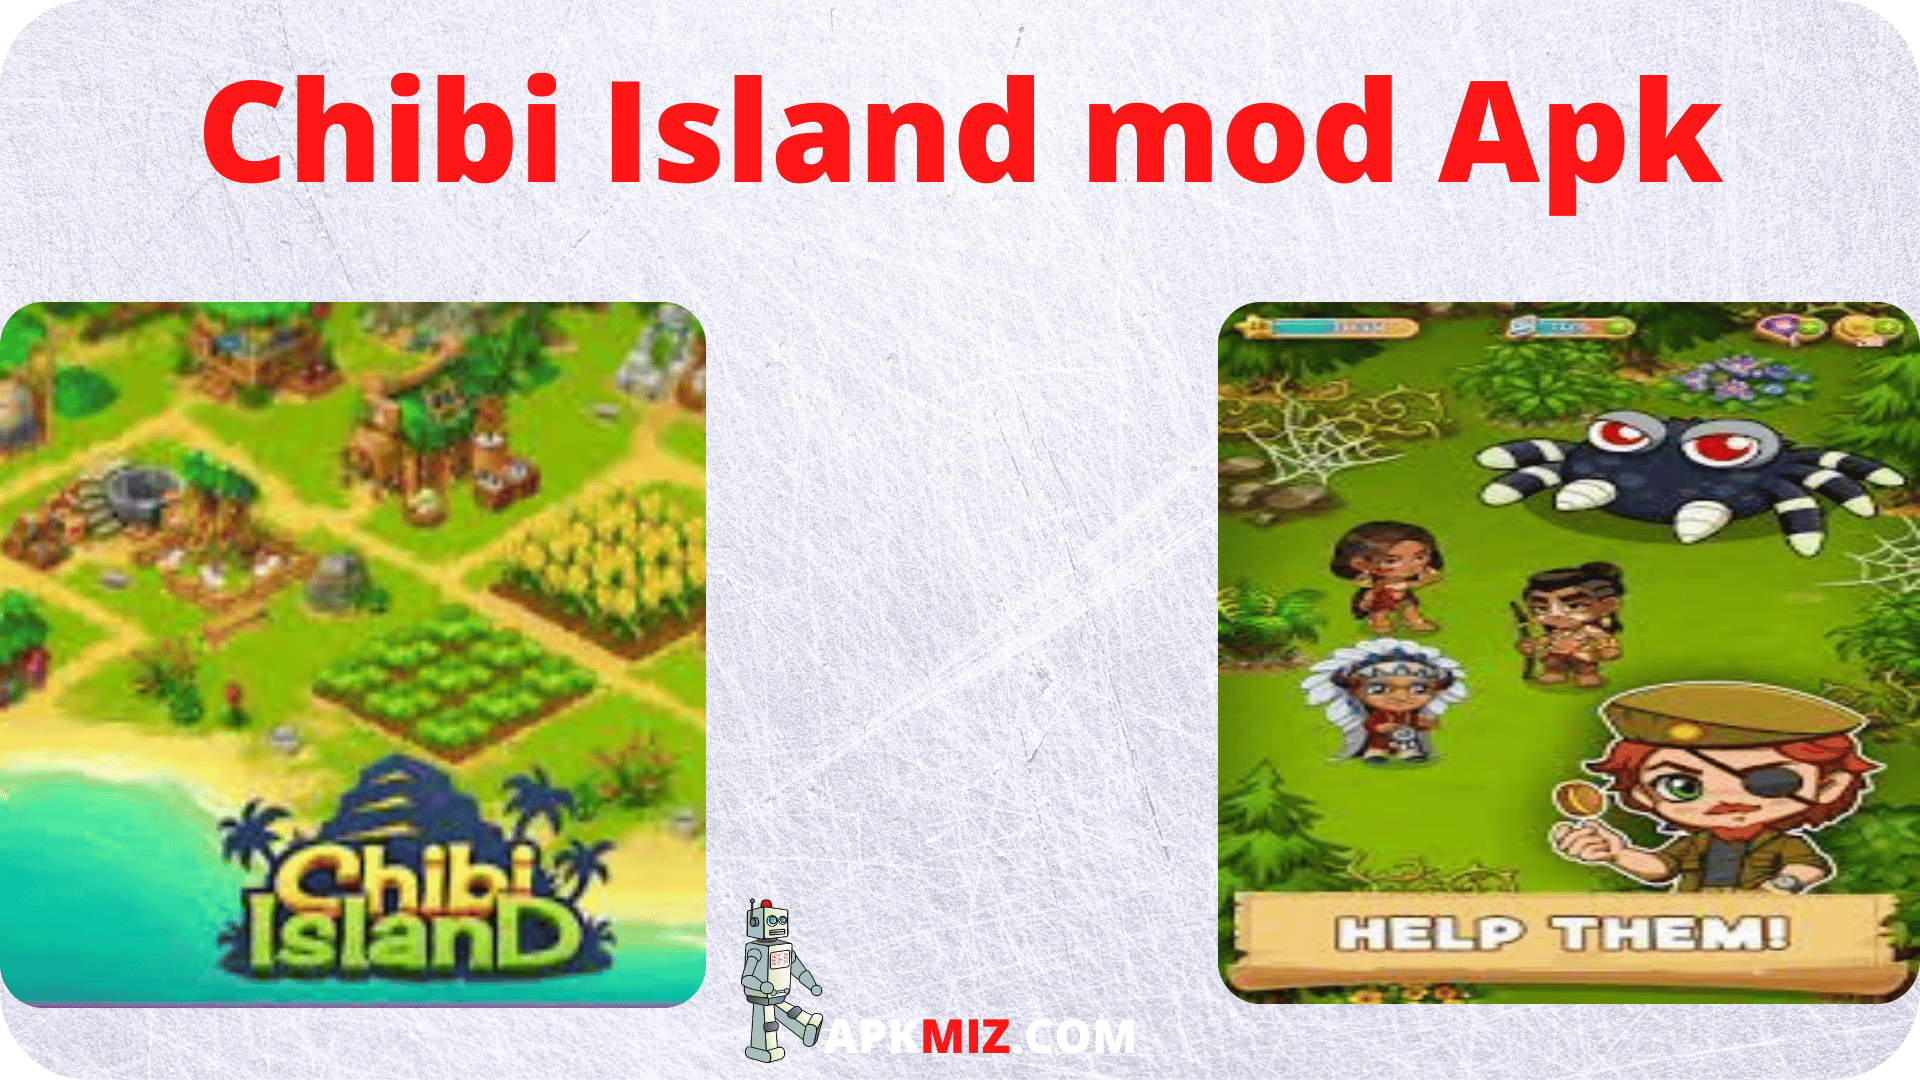 Chibi Island mod Apk